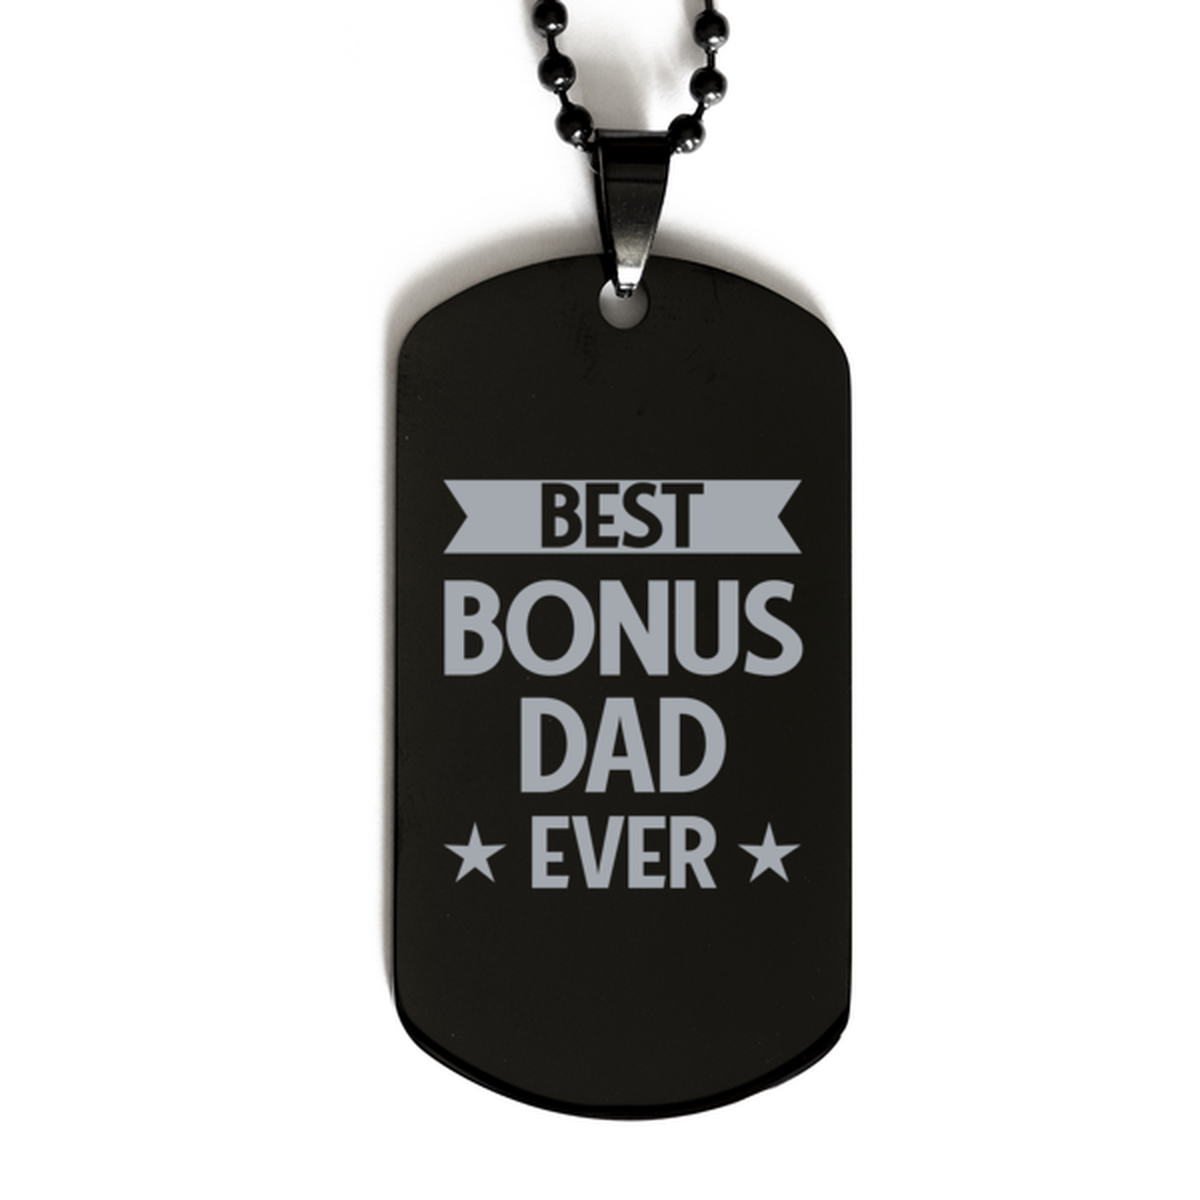 Best Bonus Dad Ever Bonus Dad Gifts, Funny Black Dog Tag For Bonus Dad, Birthday Family Presents Engraved Necklace For Men